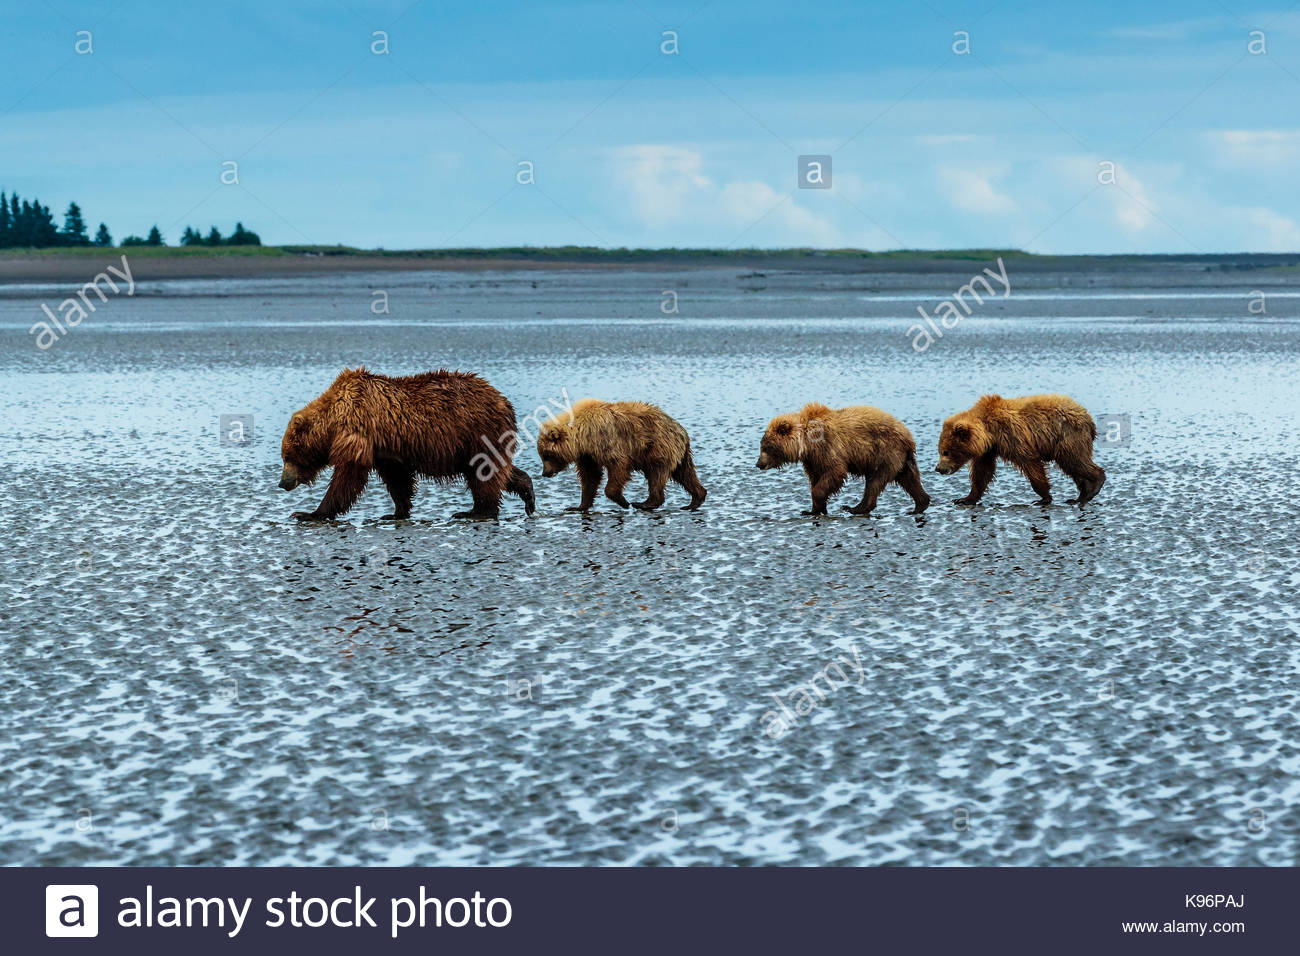 Coastal brown bears, Ursus arctos, walking across a tidal flat after digging and eating clams at Sliver Salmon Creek in Lake Clark National Park, Alaska. Stock Photo